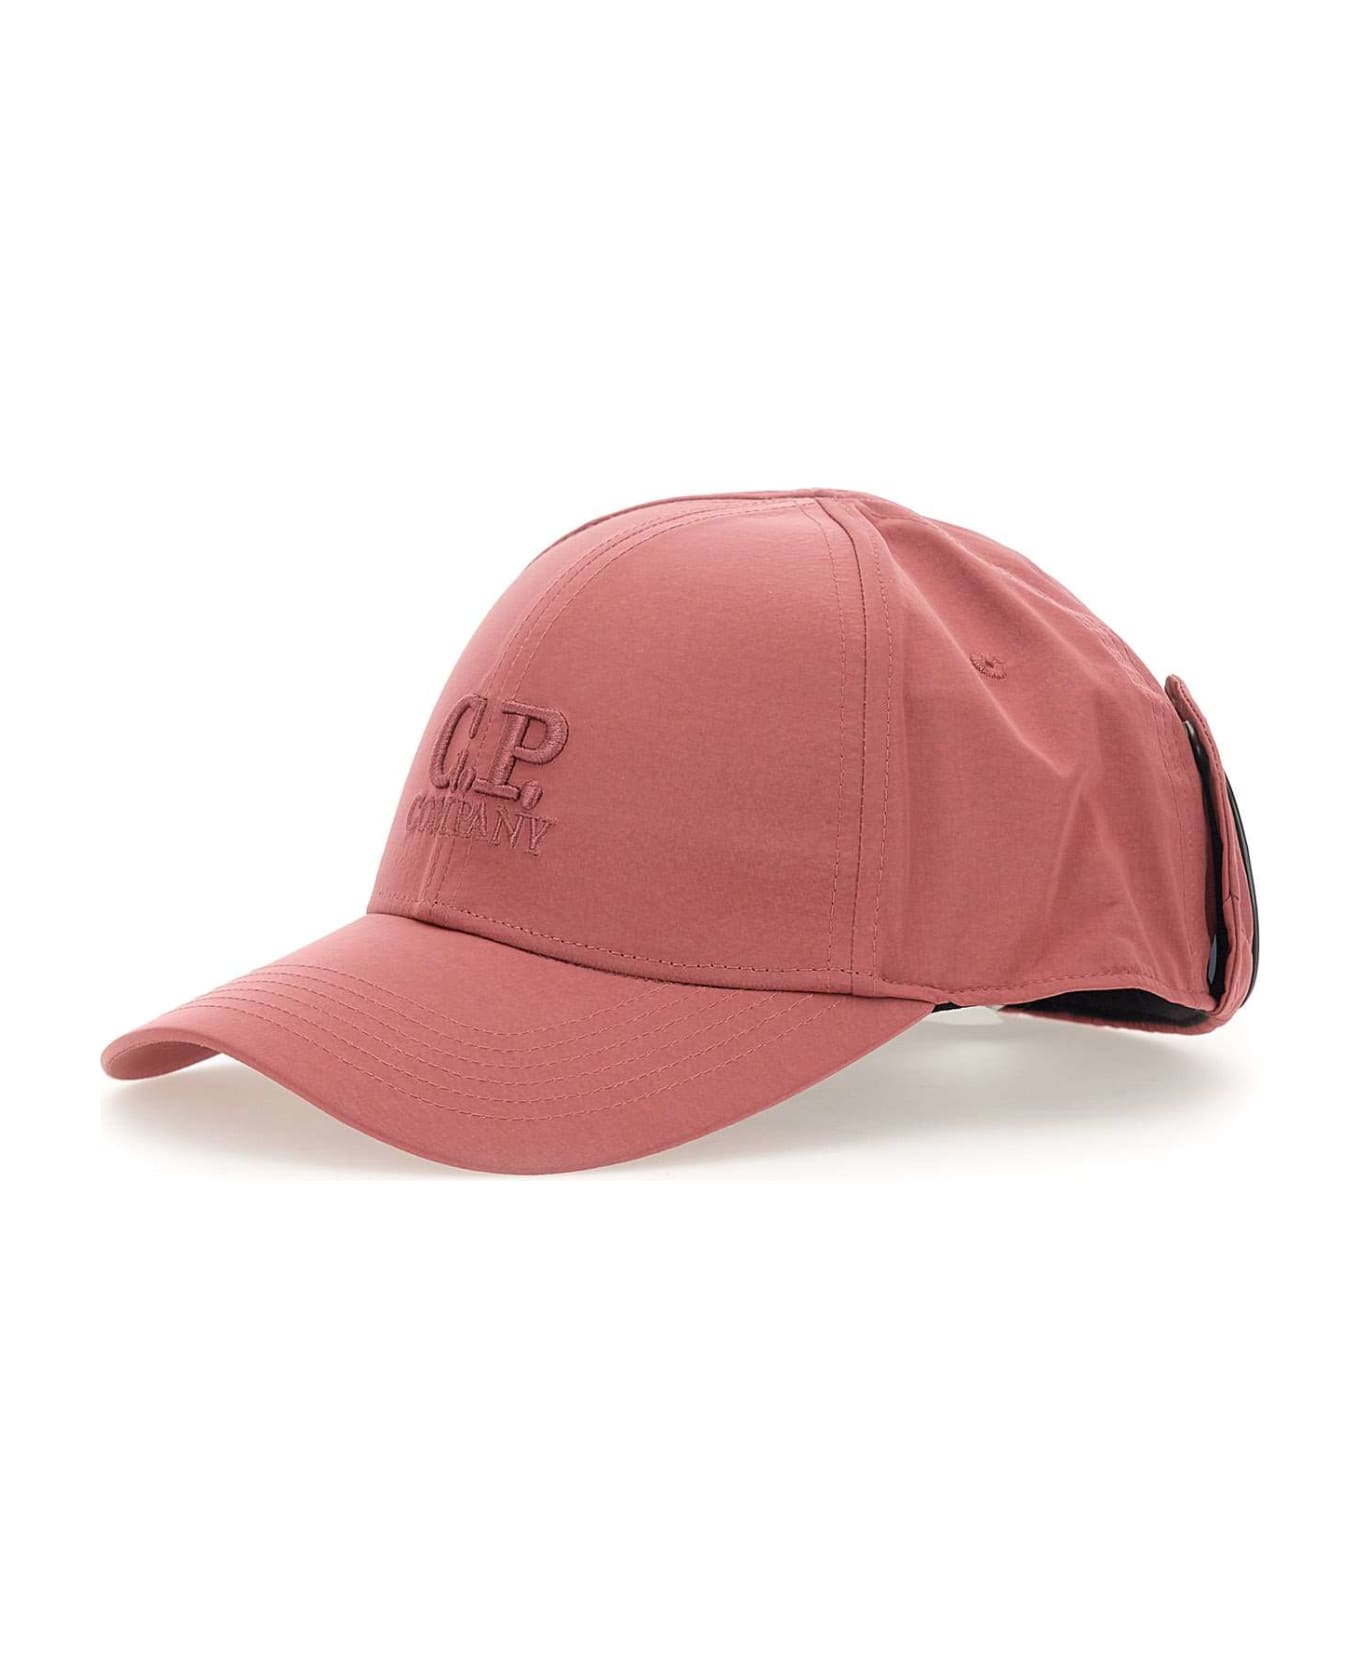 C.P. Company "chrome" Baseball Hat - PINK 帽子